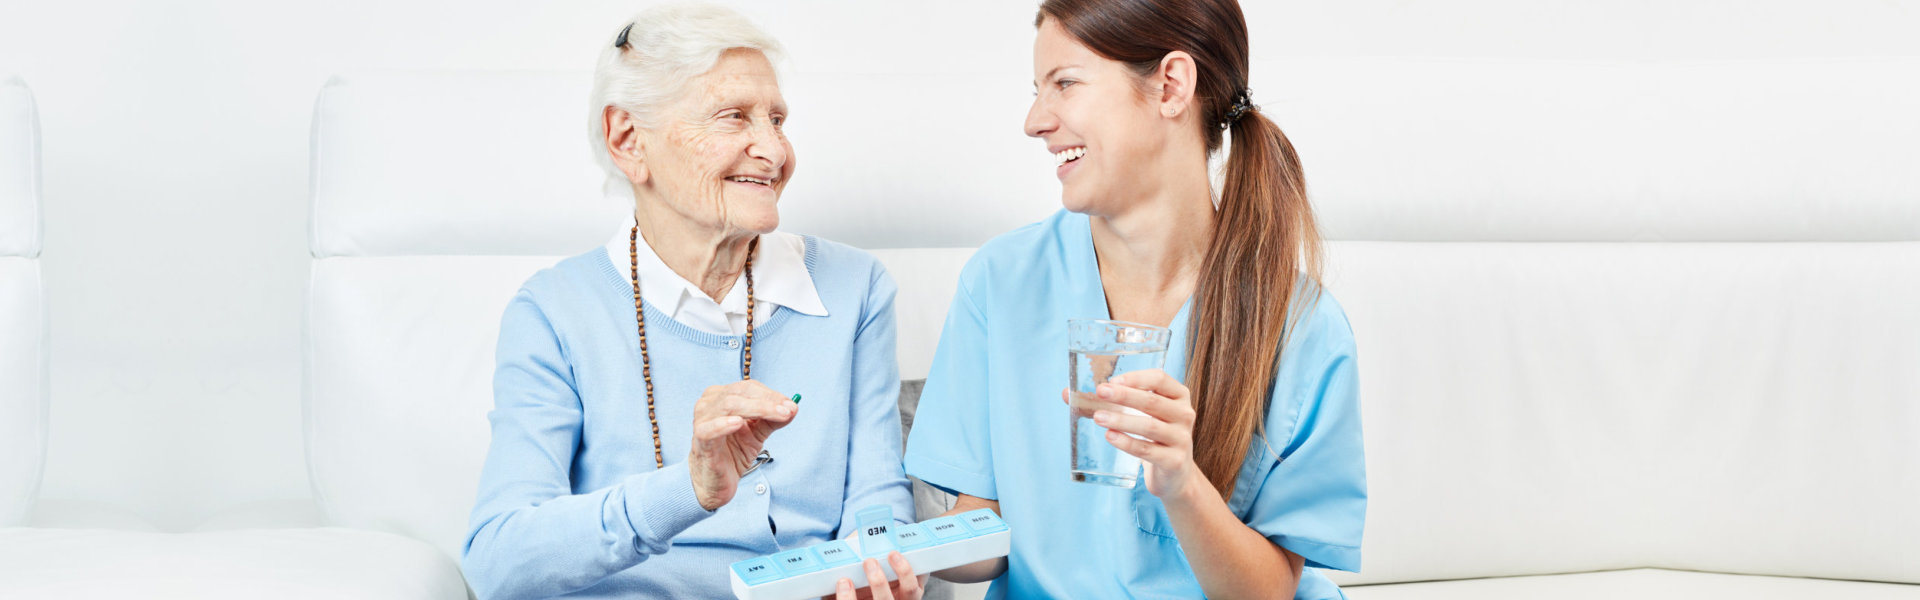 nurse assisting senior woman in drinking medicine